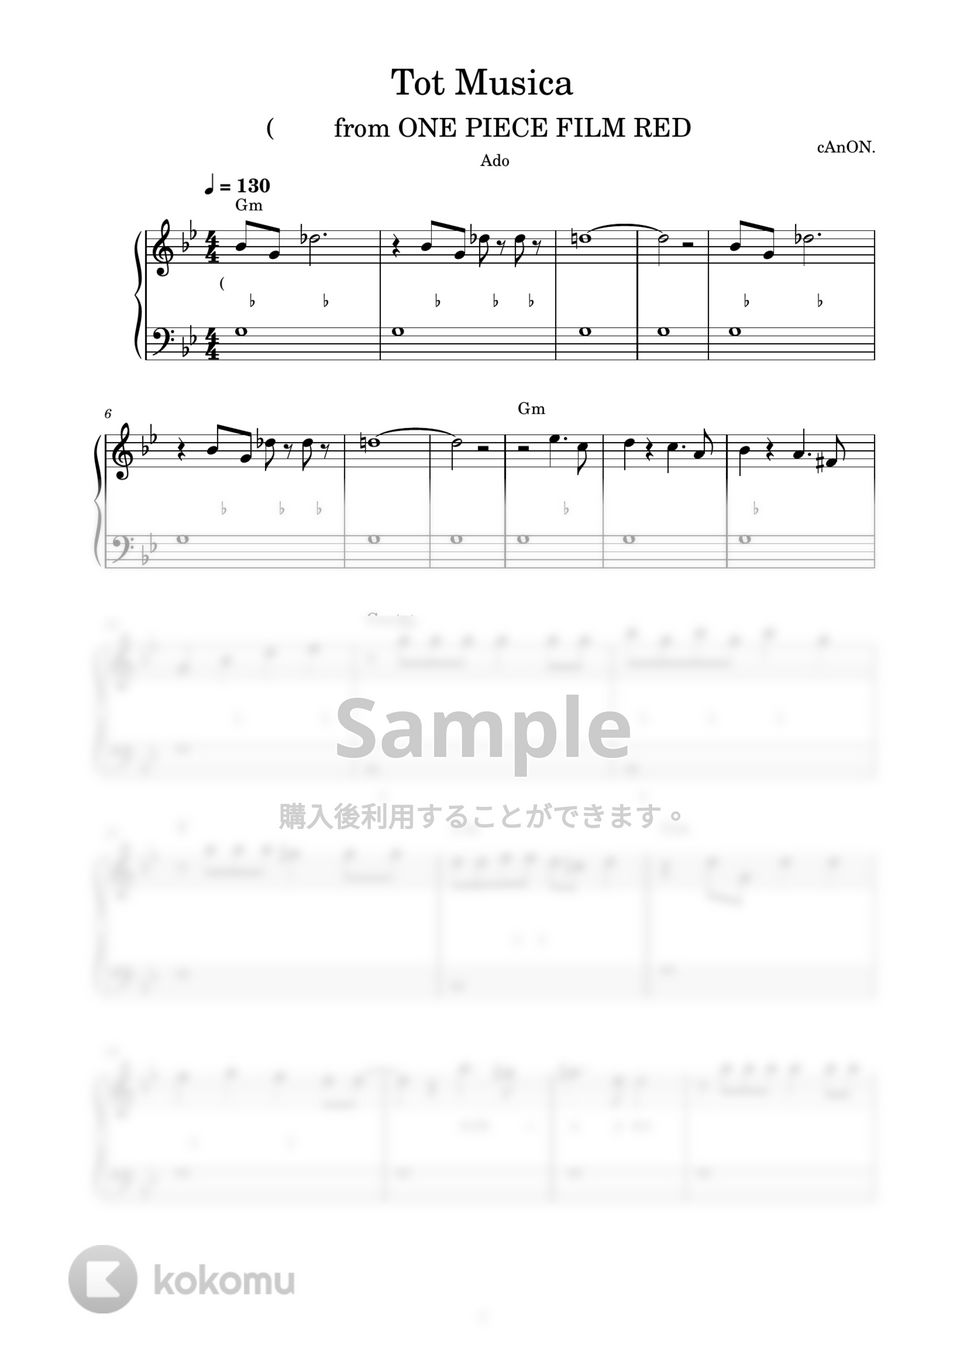 Ado - Tot Musica (ウタ from ONE PIECE FILM RED) (ピアノ楽譜 / かんたん両手 / 歌詞付き / ドレミ付き / 初心者向き) by piano.tokyo